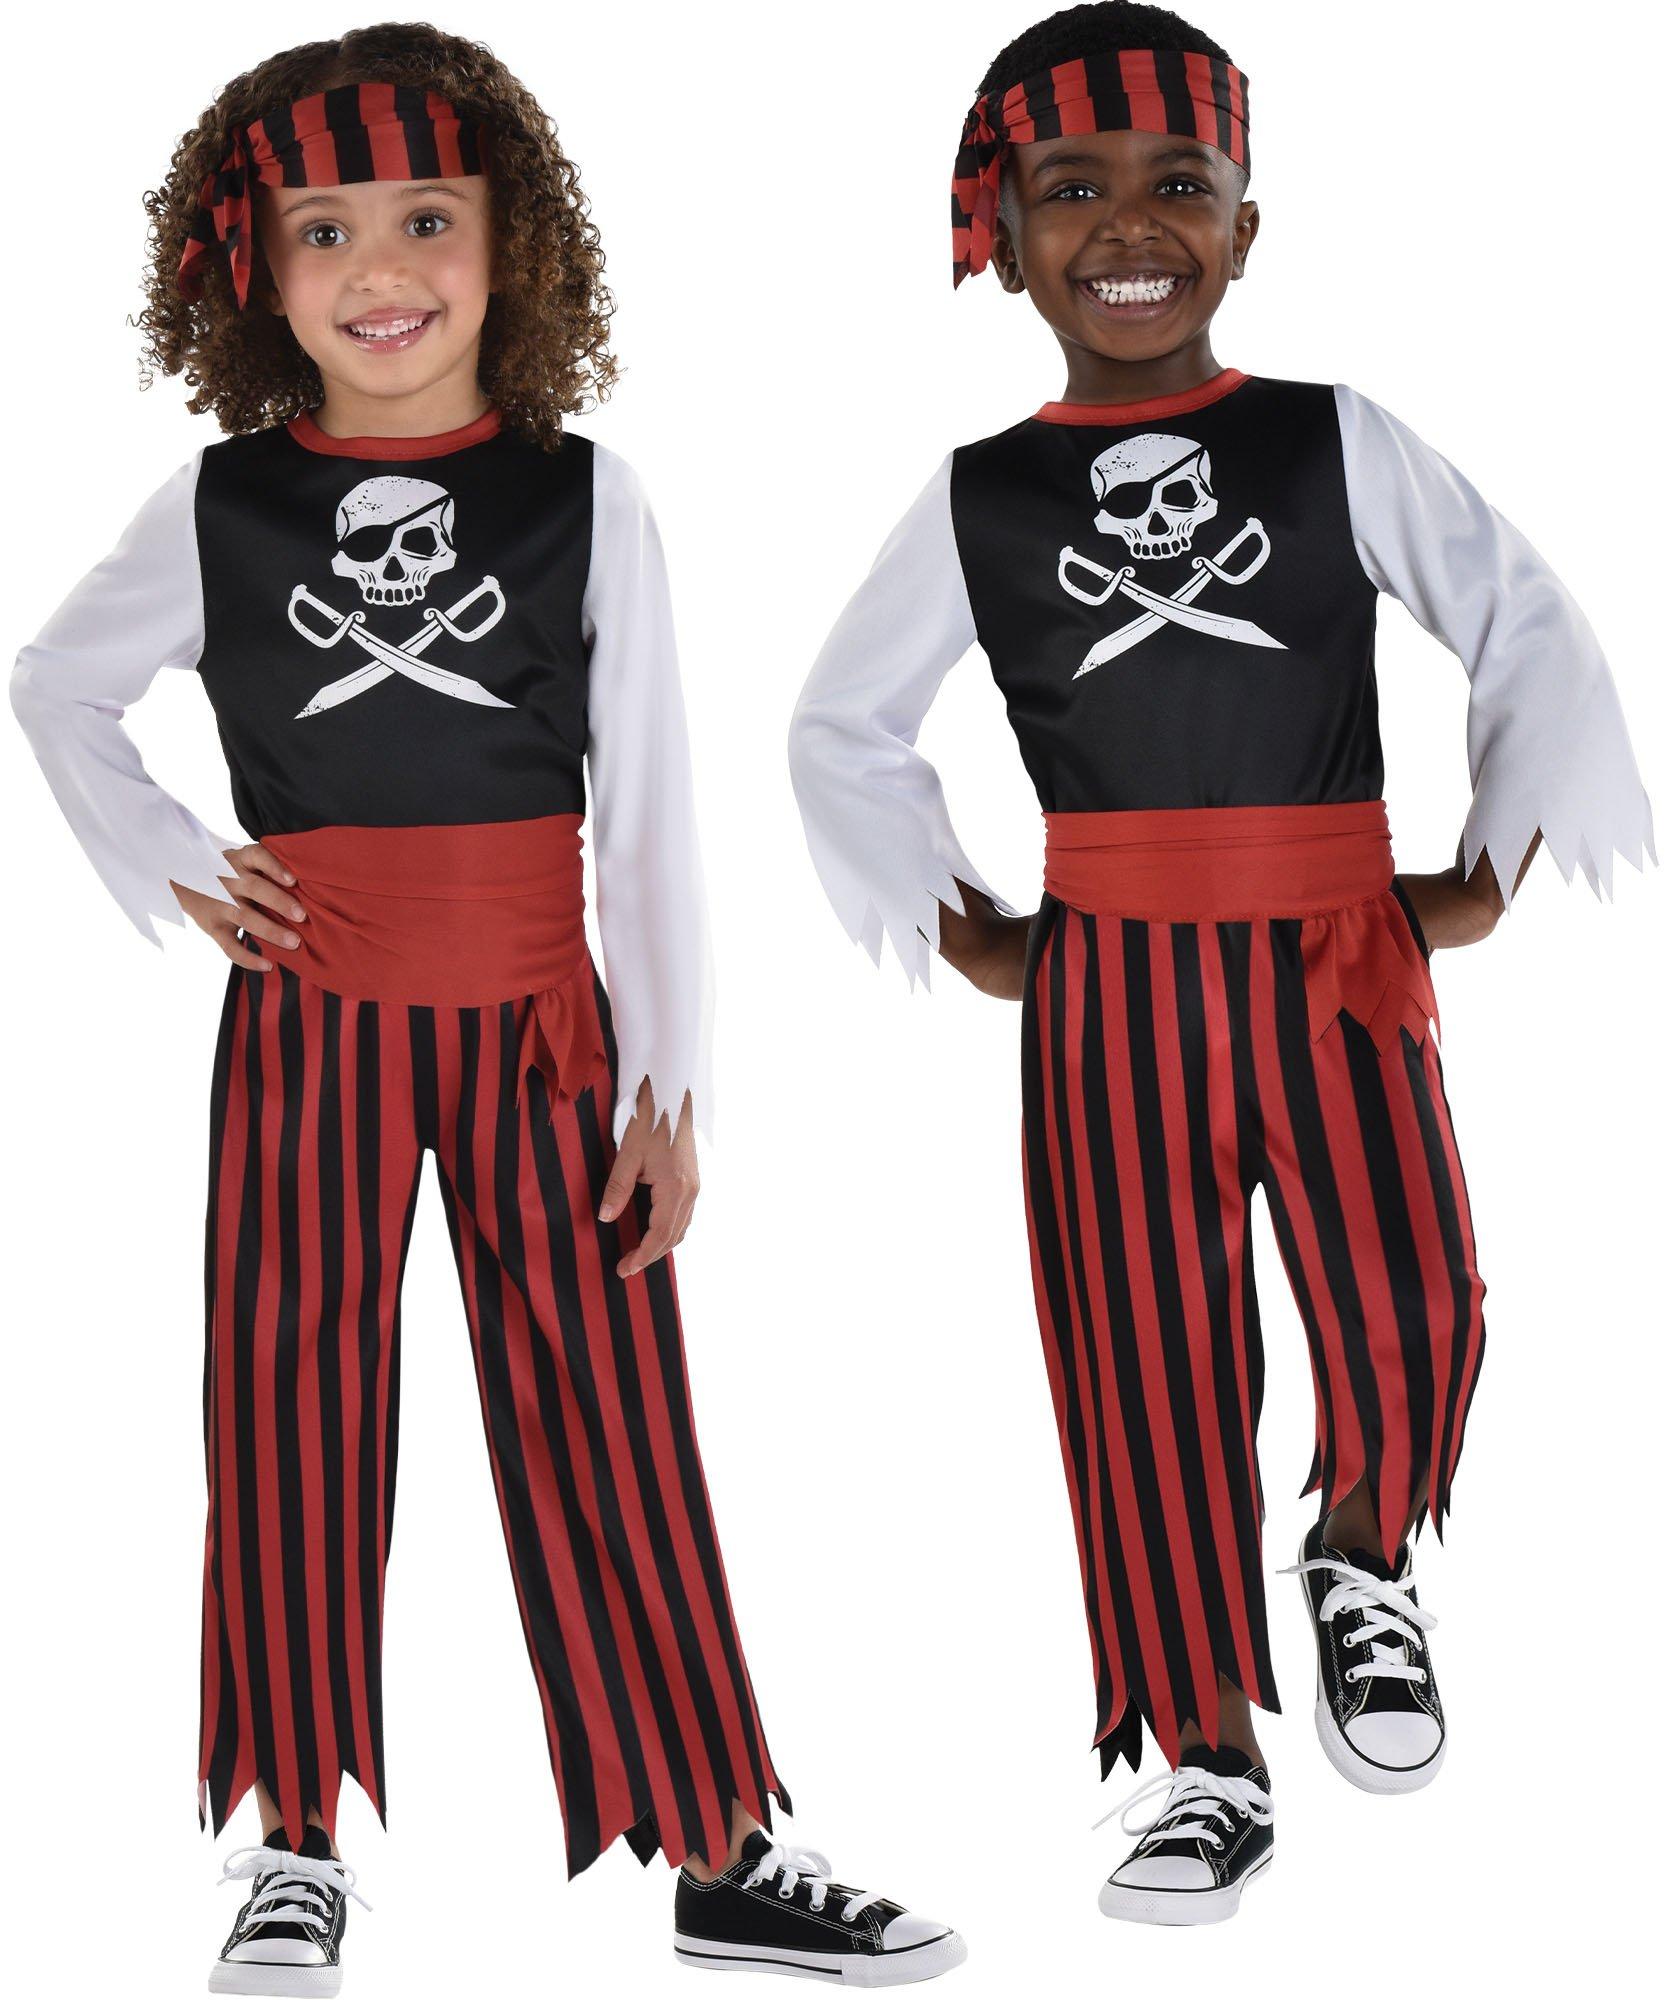 Shipmatey Pirate | Child